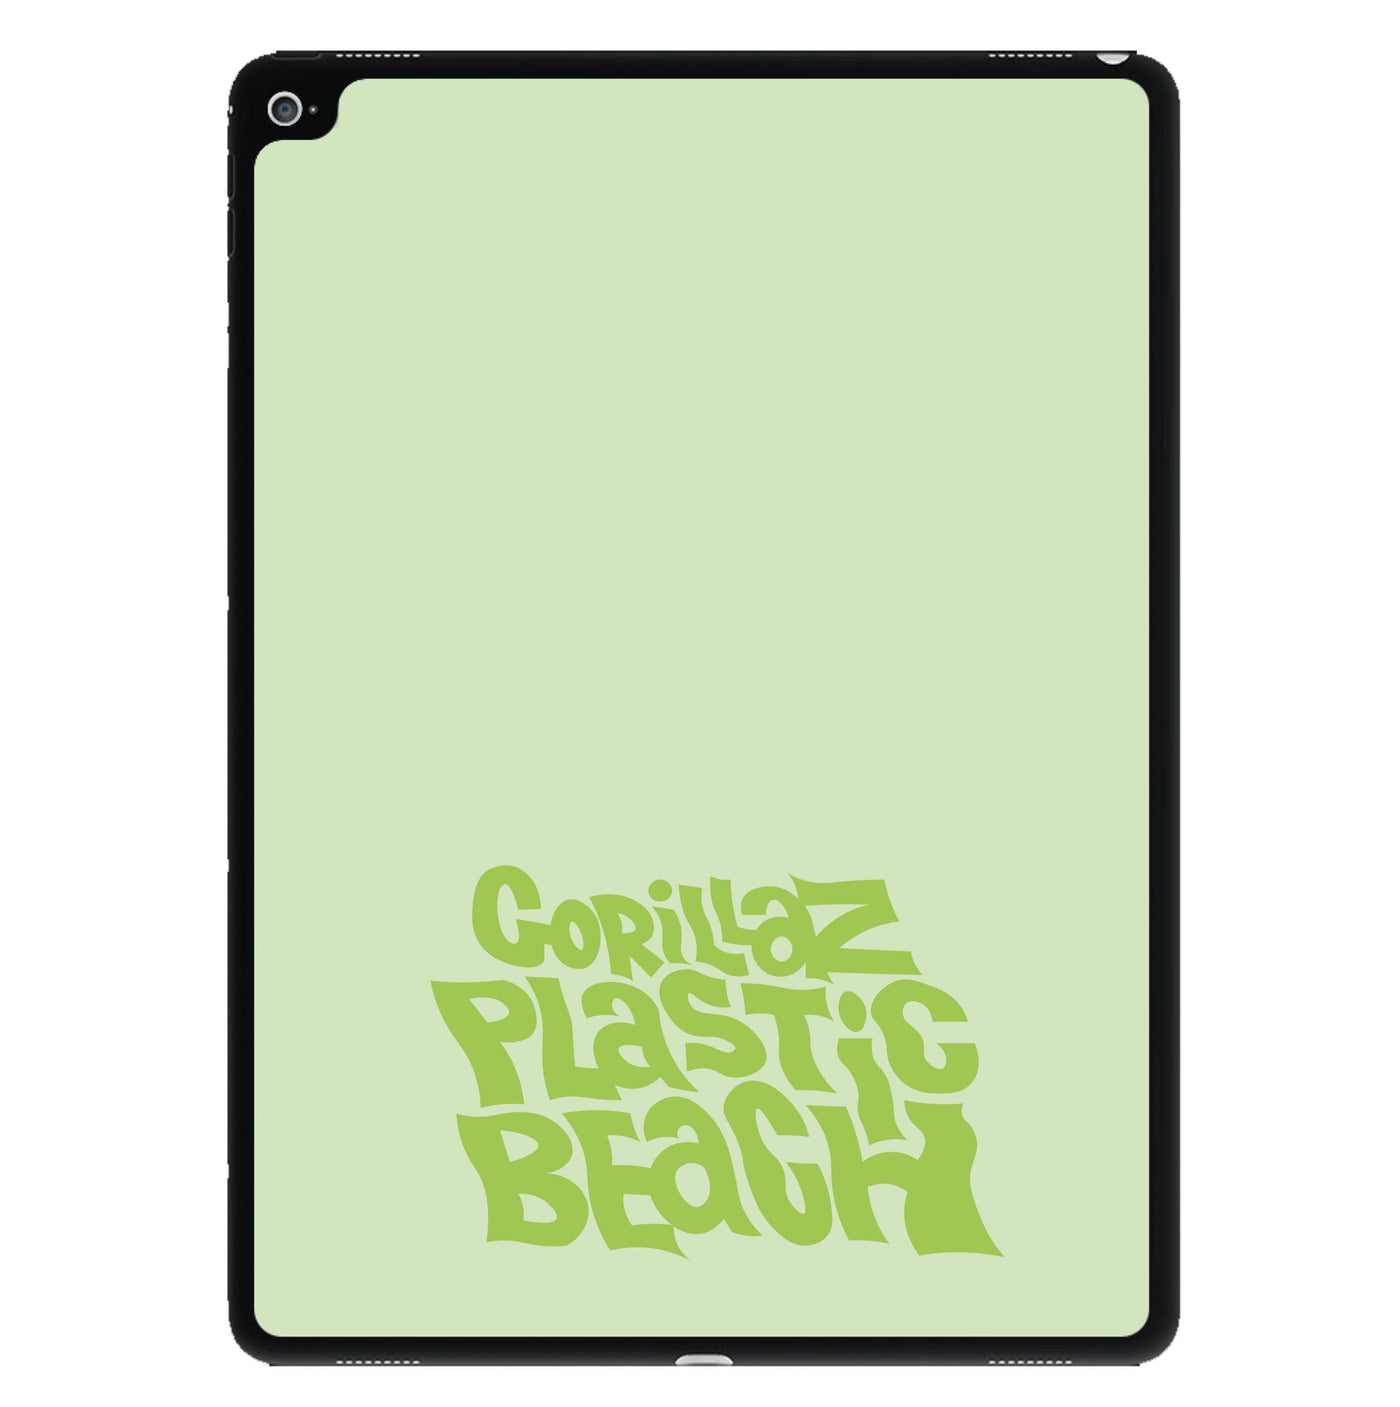 Gorillaz Plastic Beach iPad Case